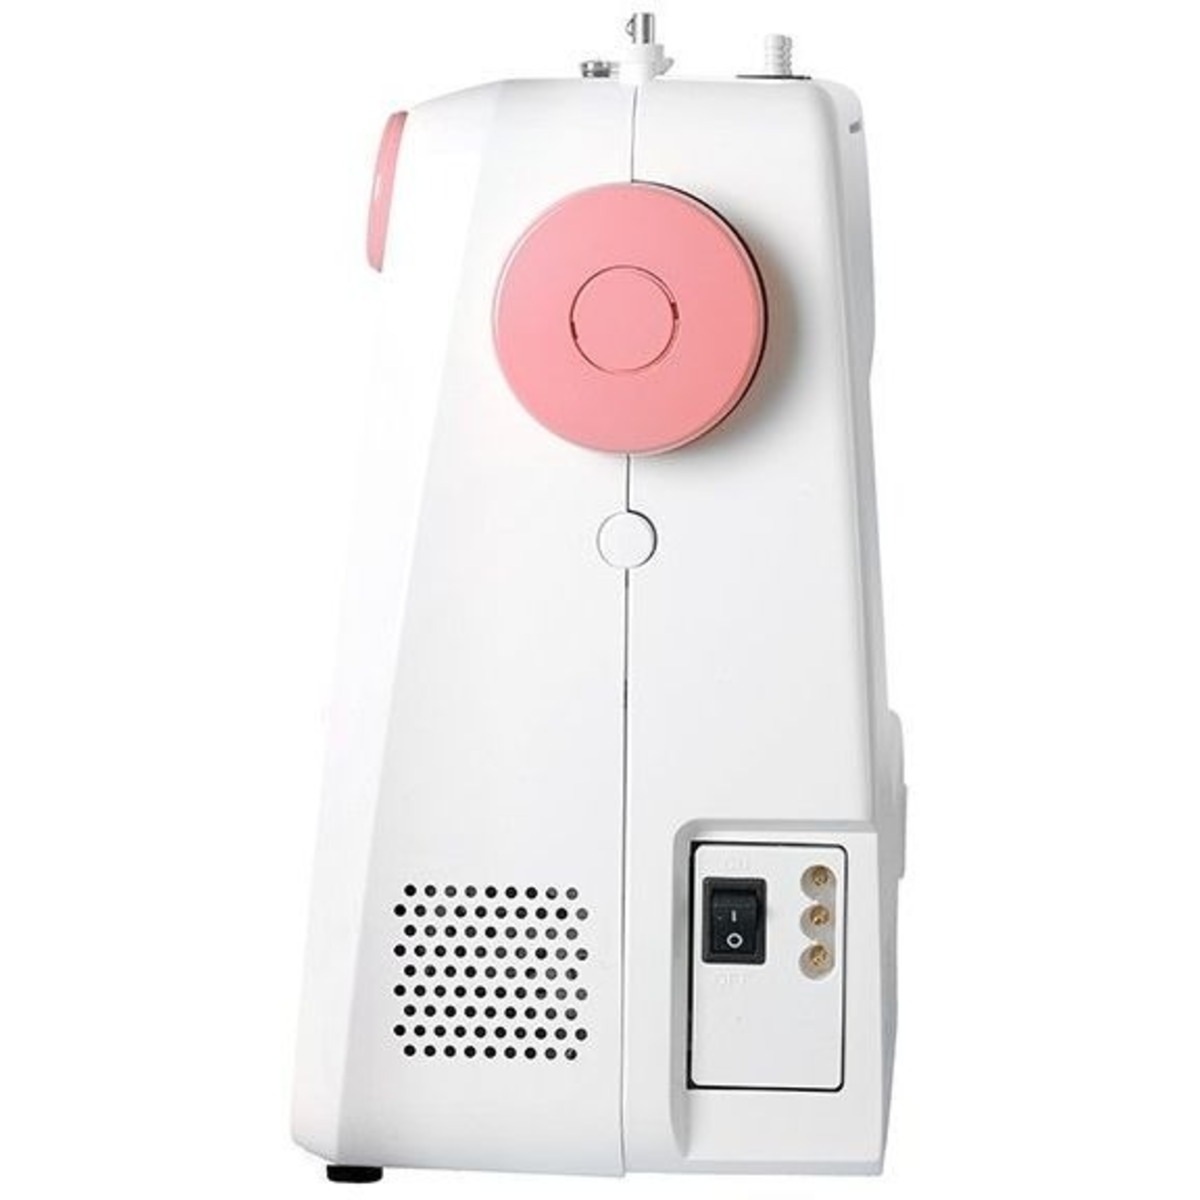 Швейная машина Janome 311PG (Цвет: White/Pink)